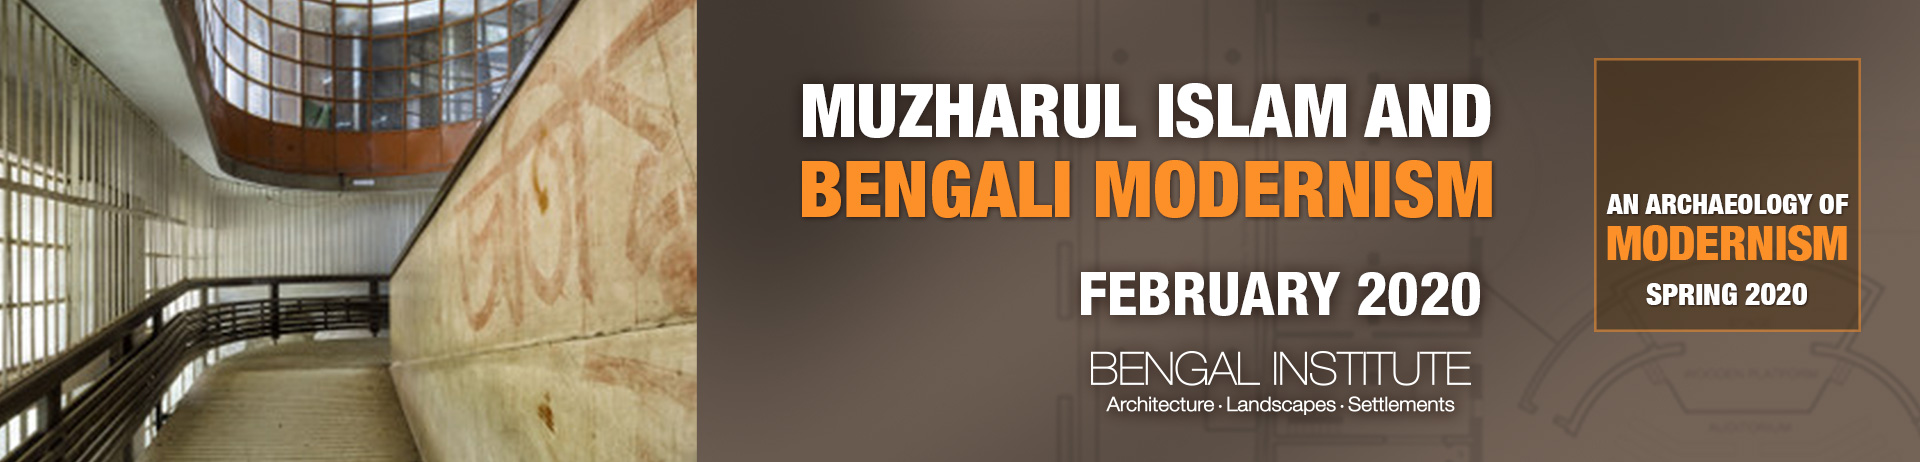 February 2020 Muzharul Islam and Bengali Modernism